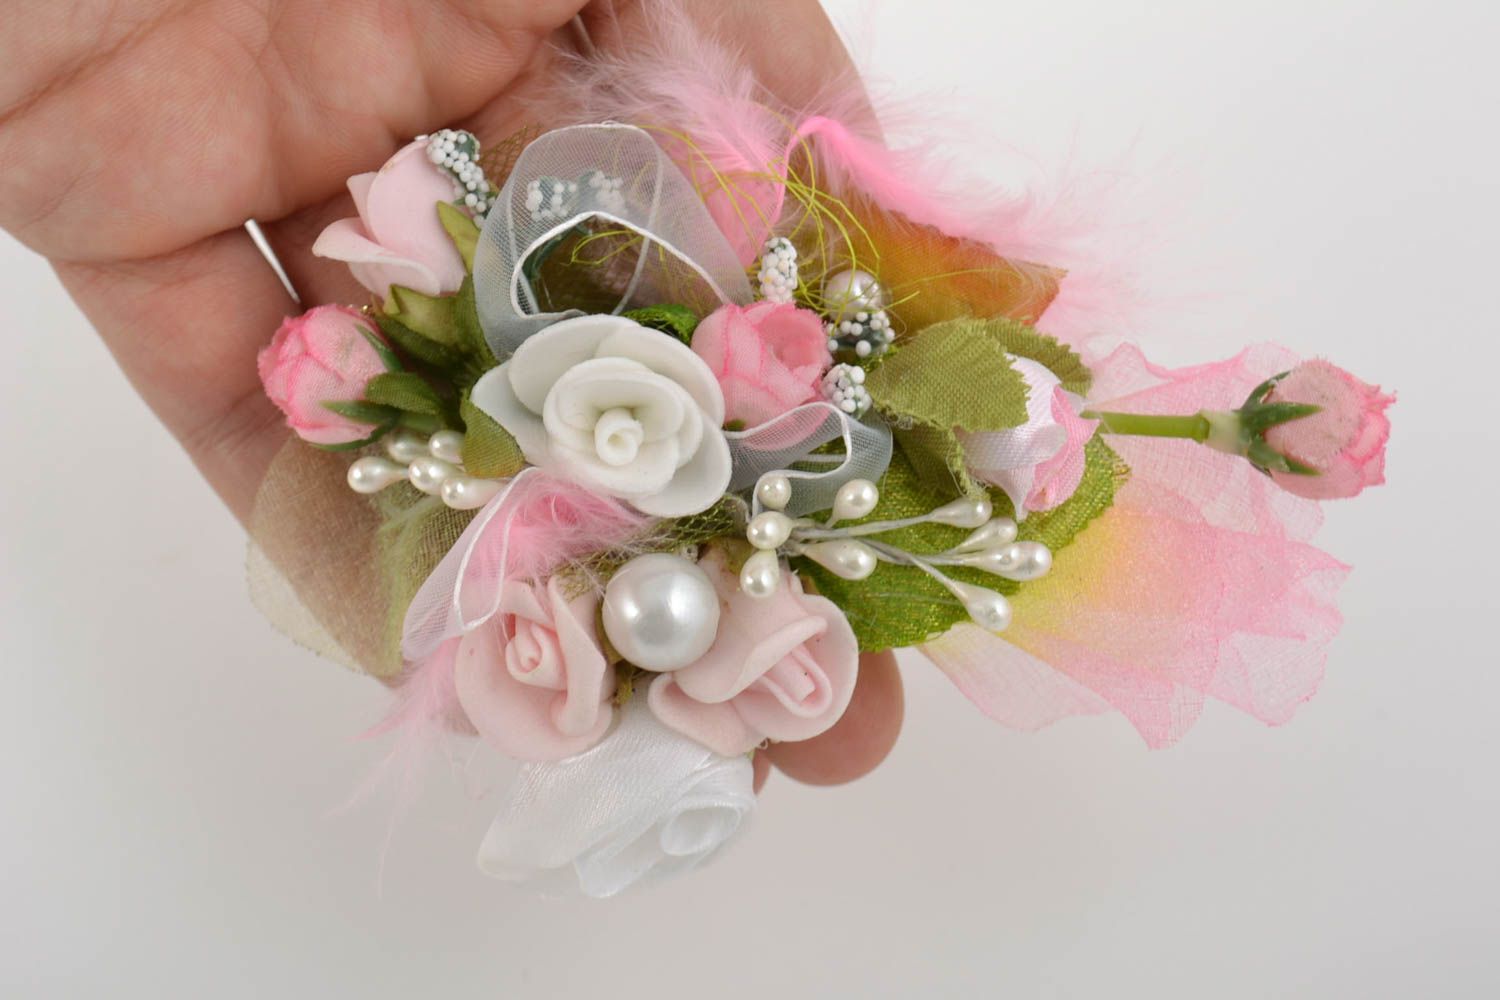 Handmade brooch designer brooch flower boutonniere unusual wedding accessory photo 3